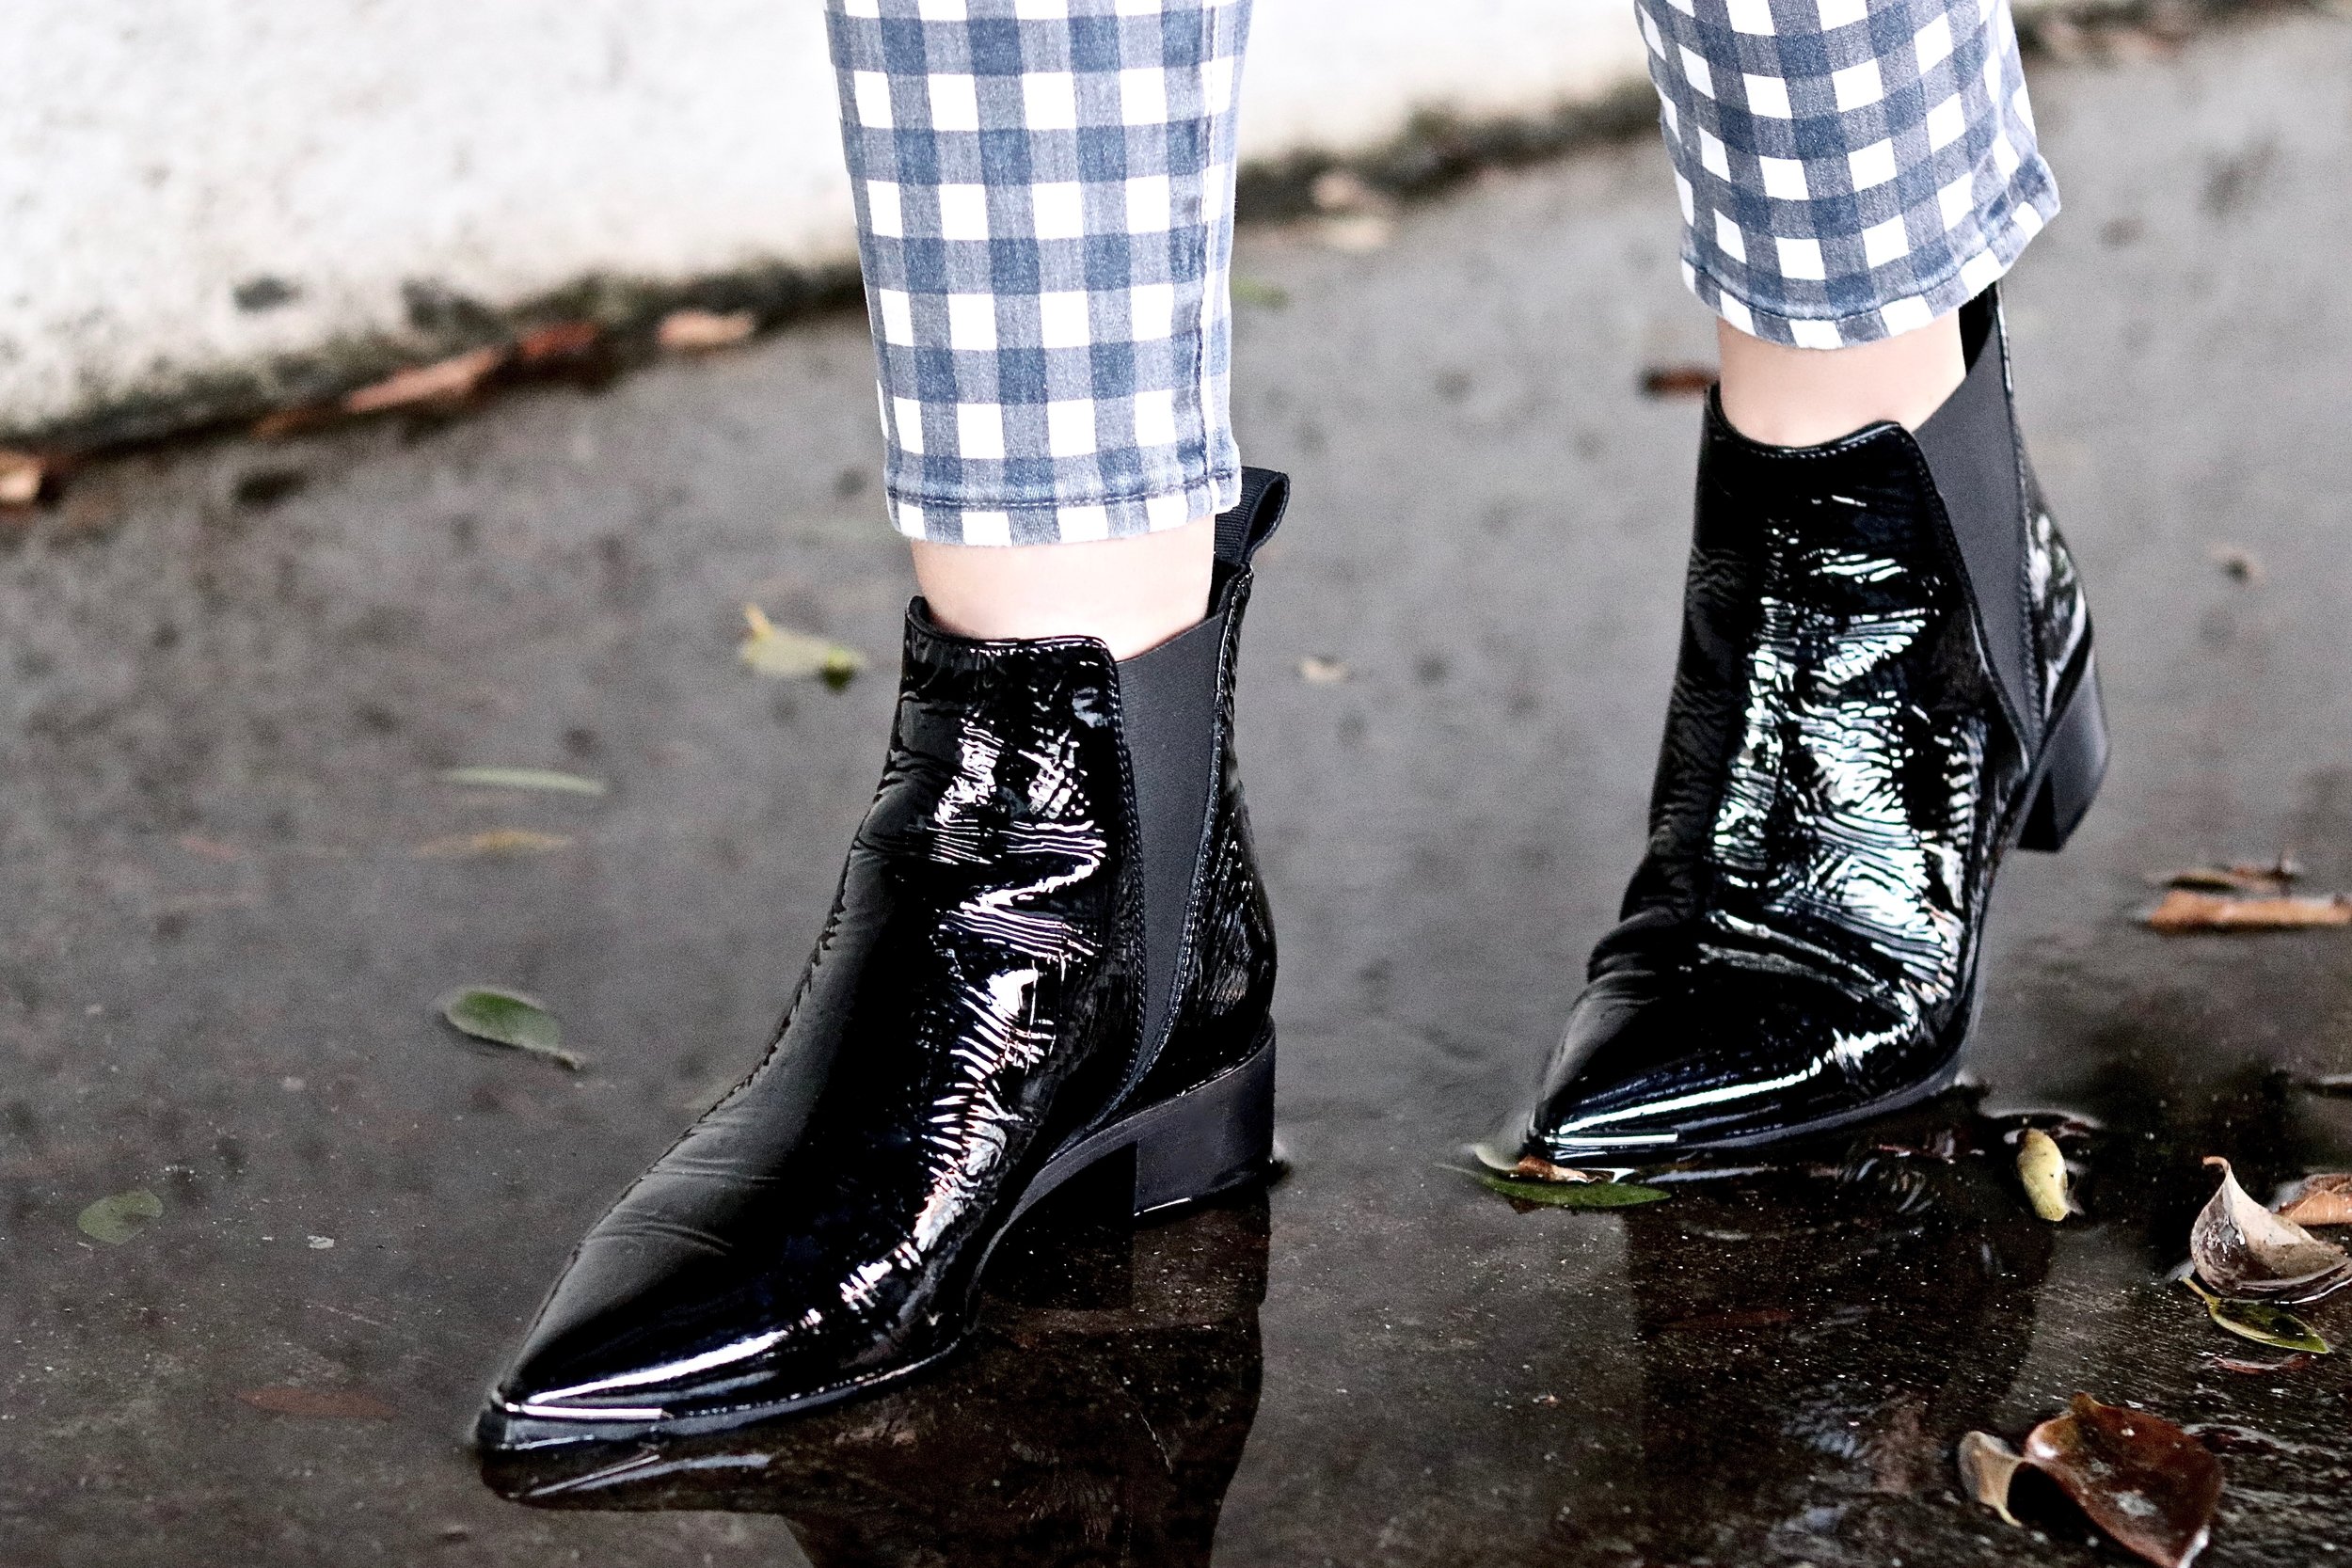 rainy day footwear